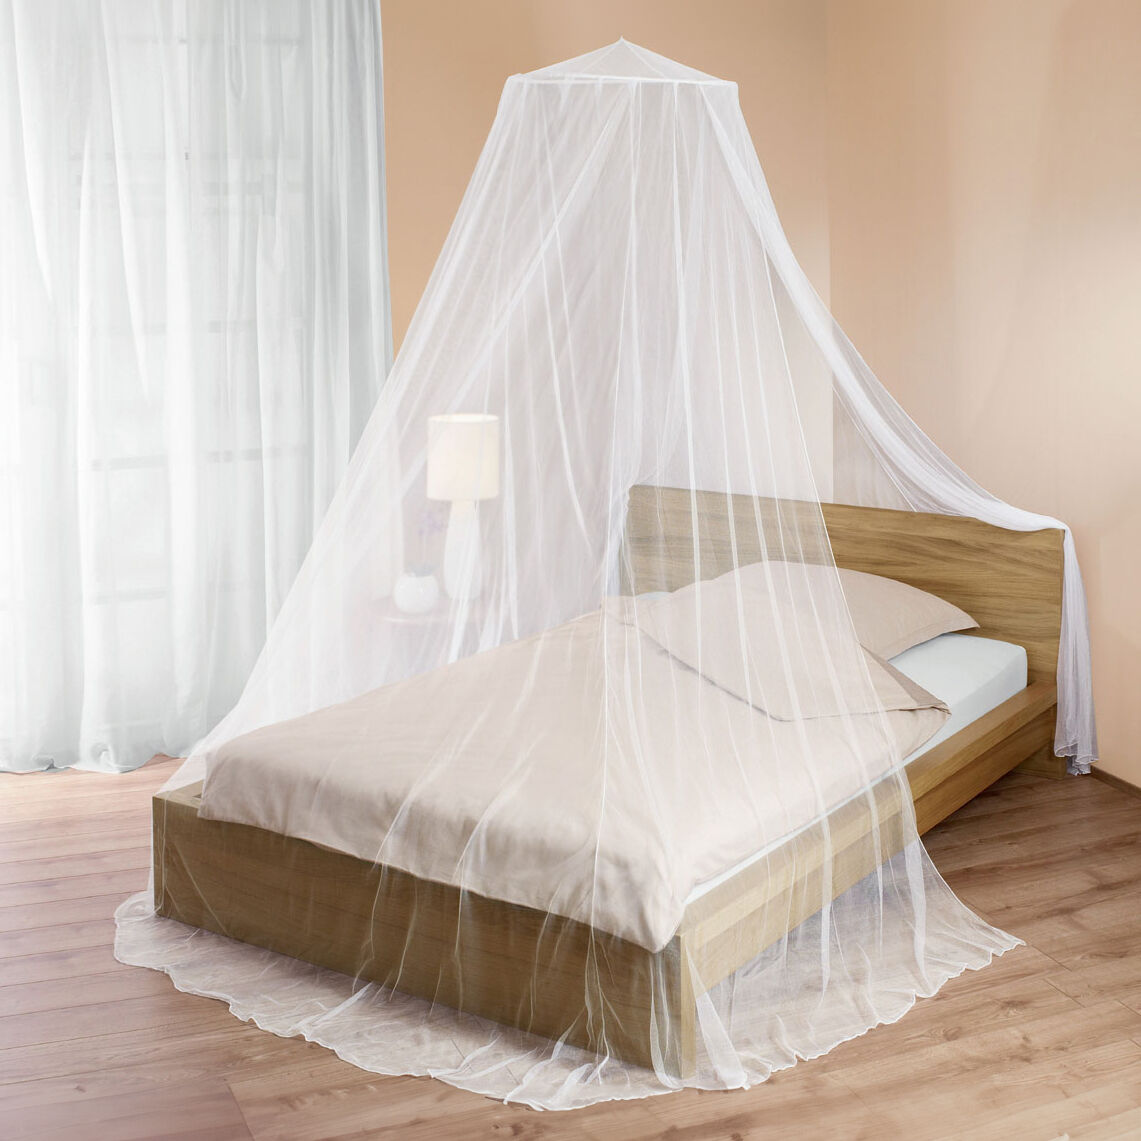 Dosel de cama tipo mosquitera (D60 cm) Blanco